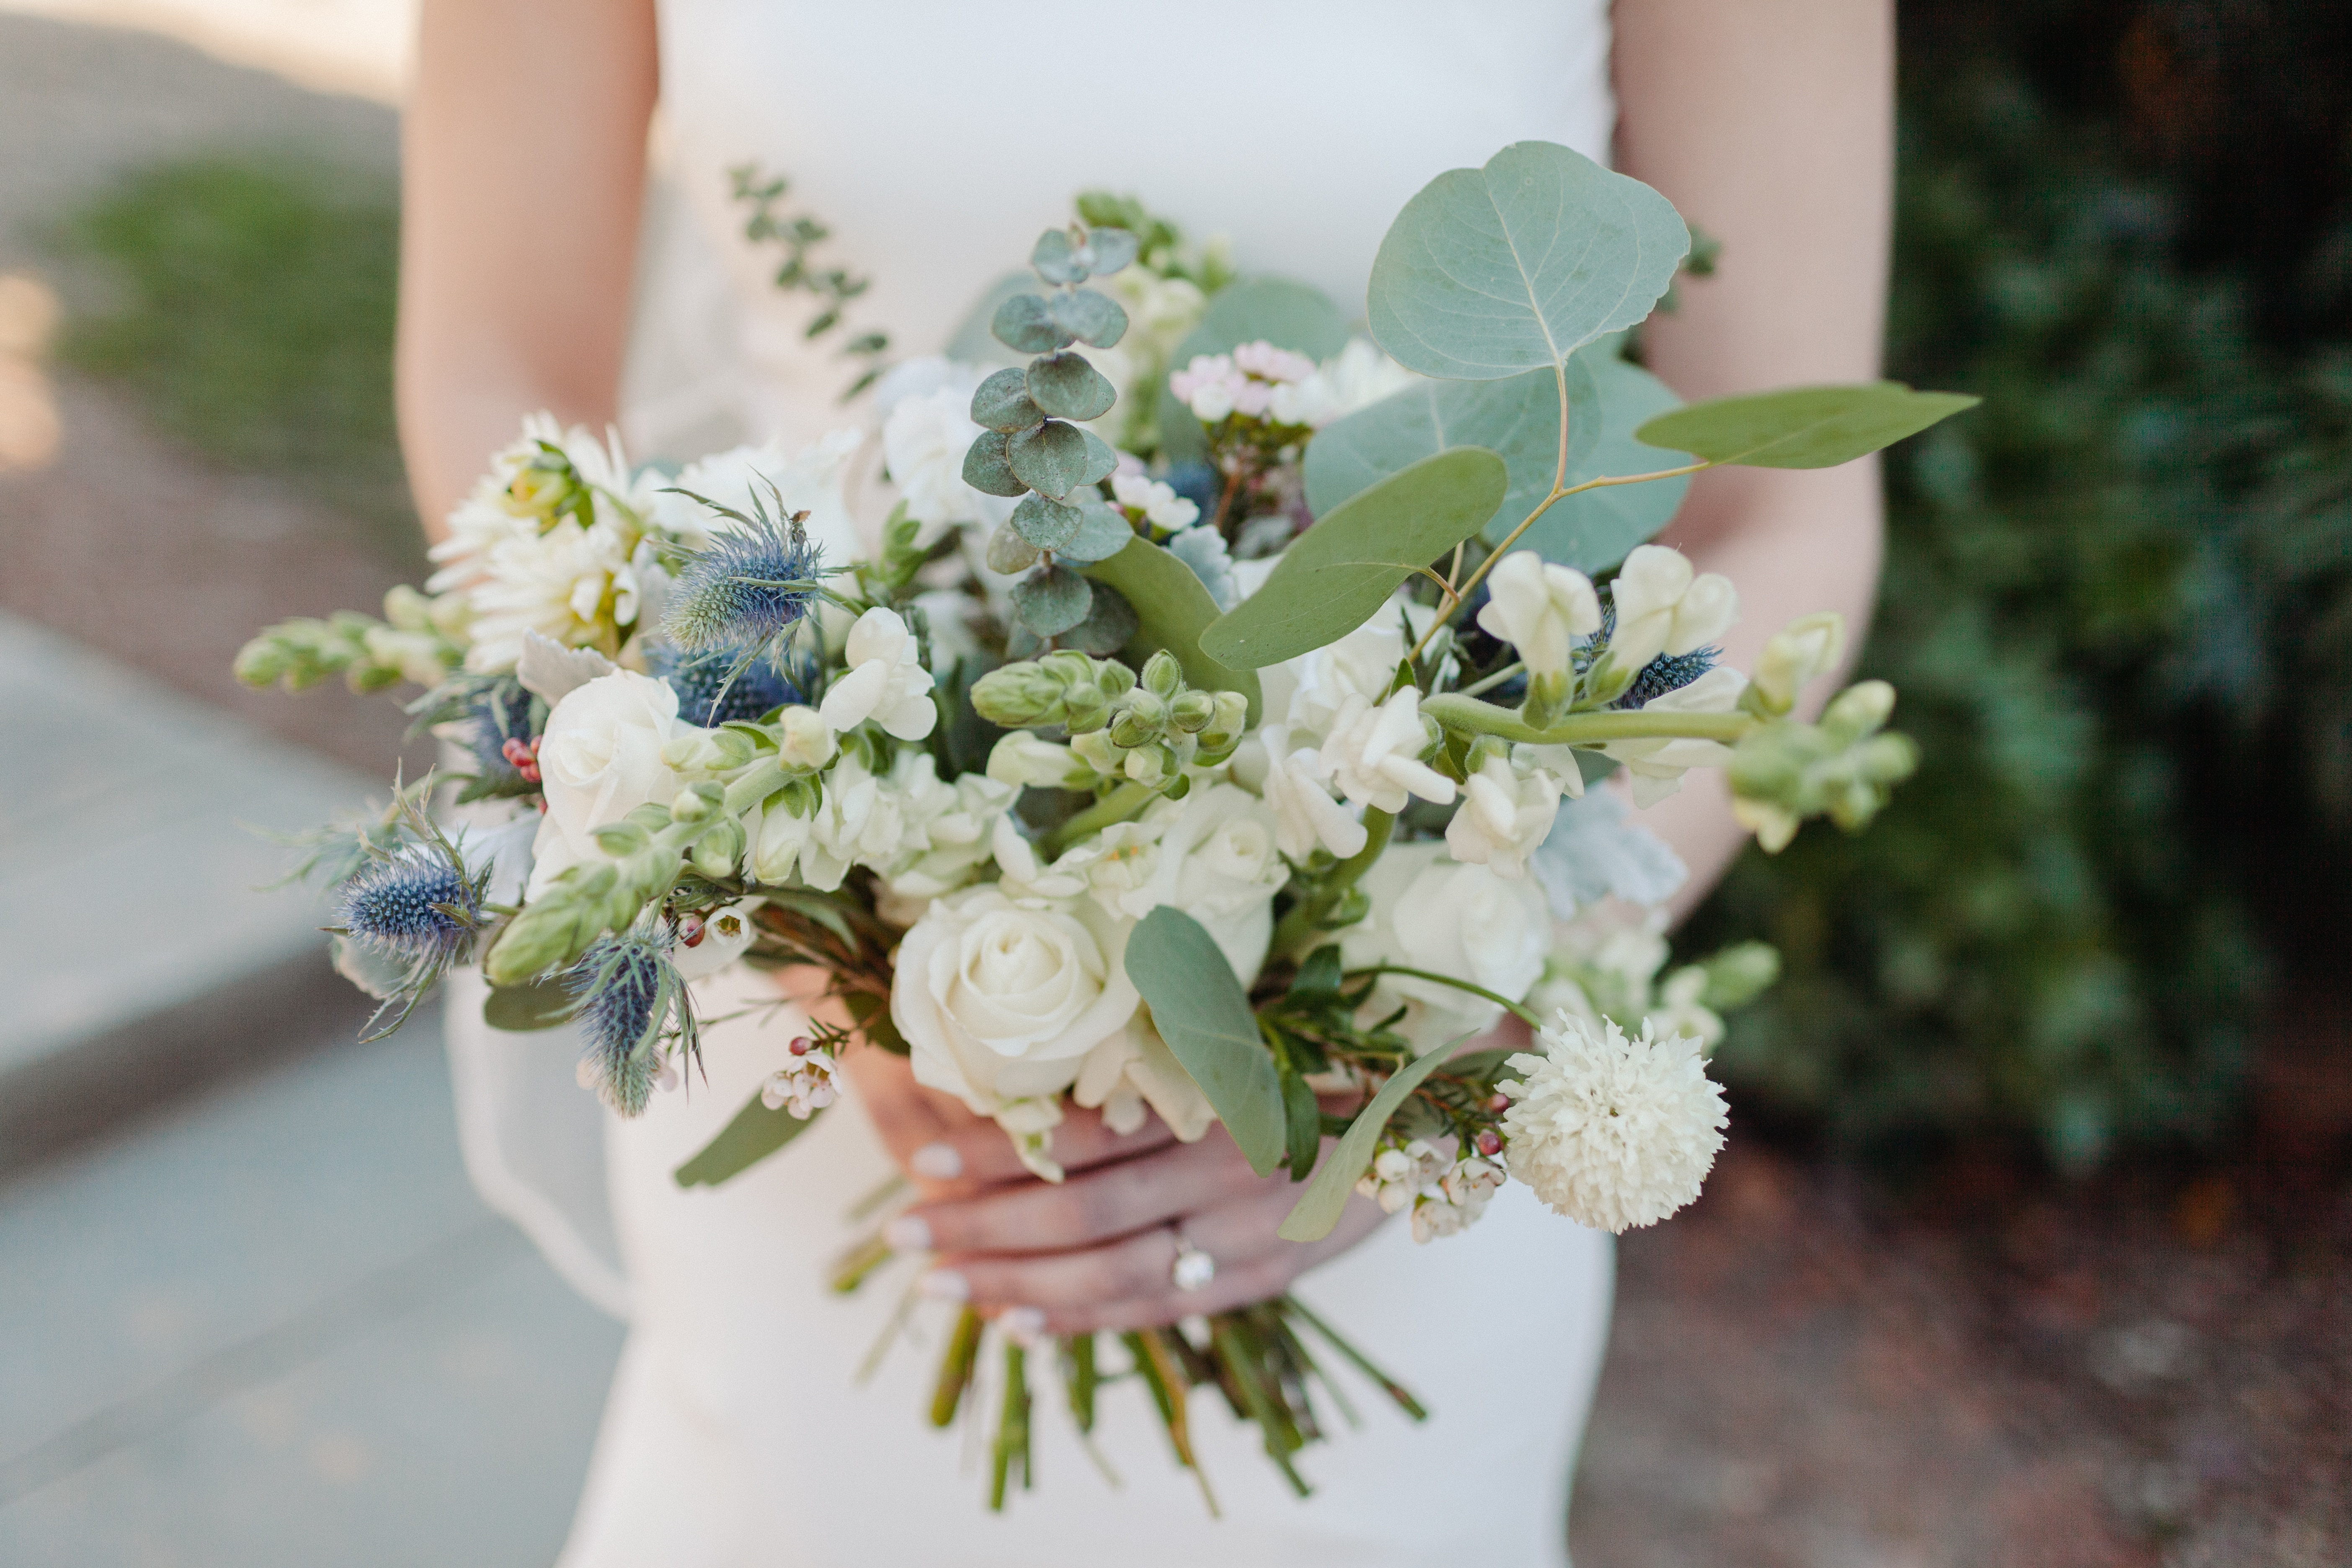 whiteclover wedding flower suggestions